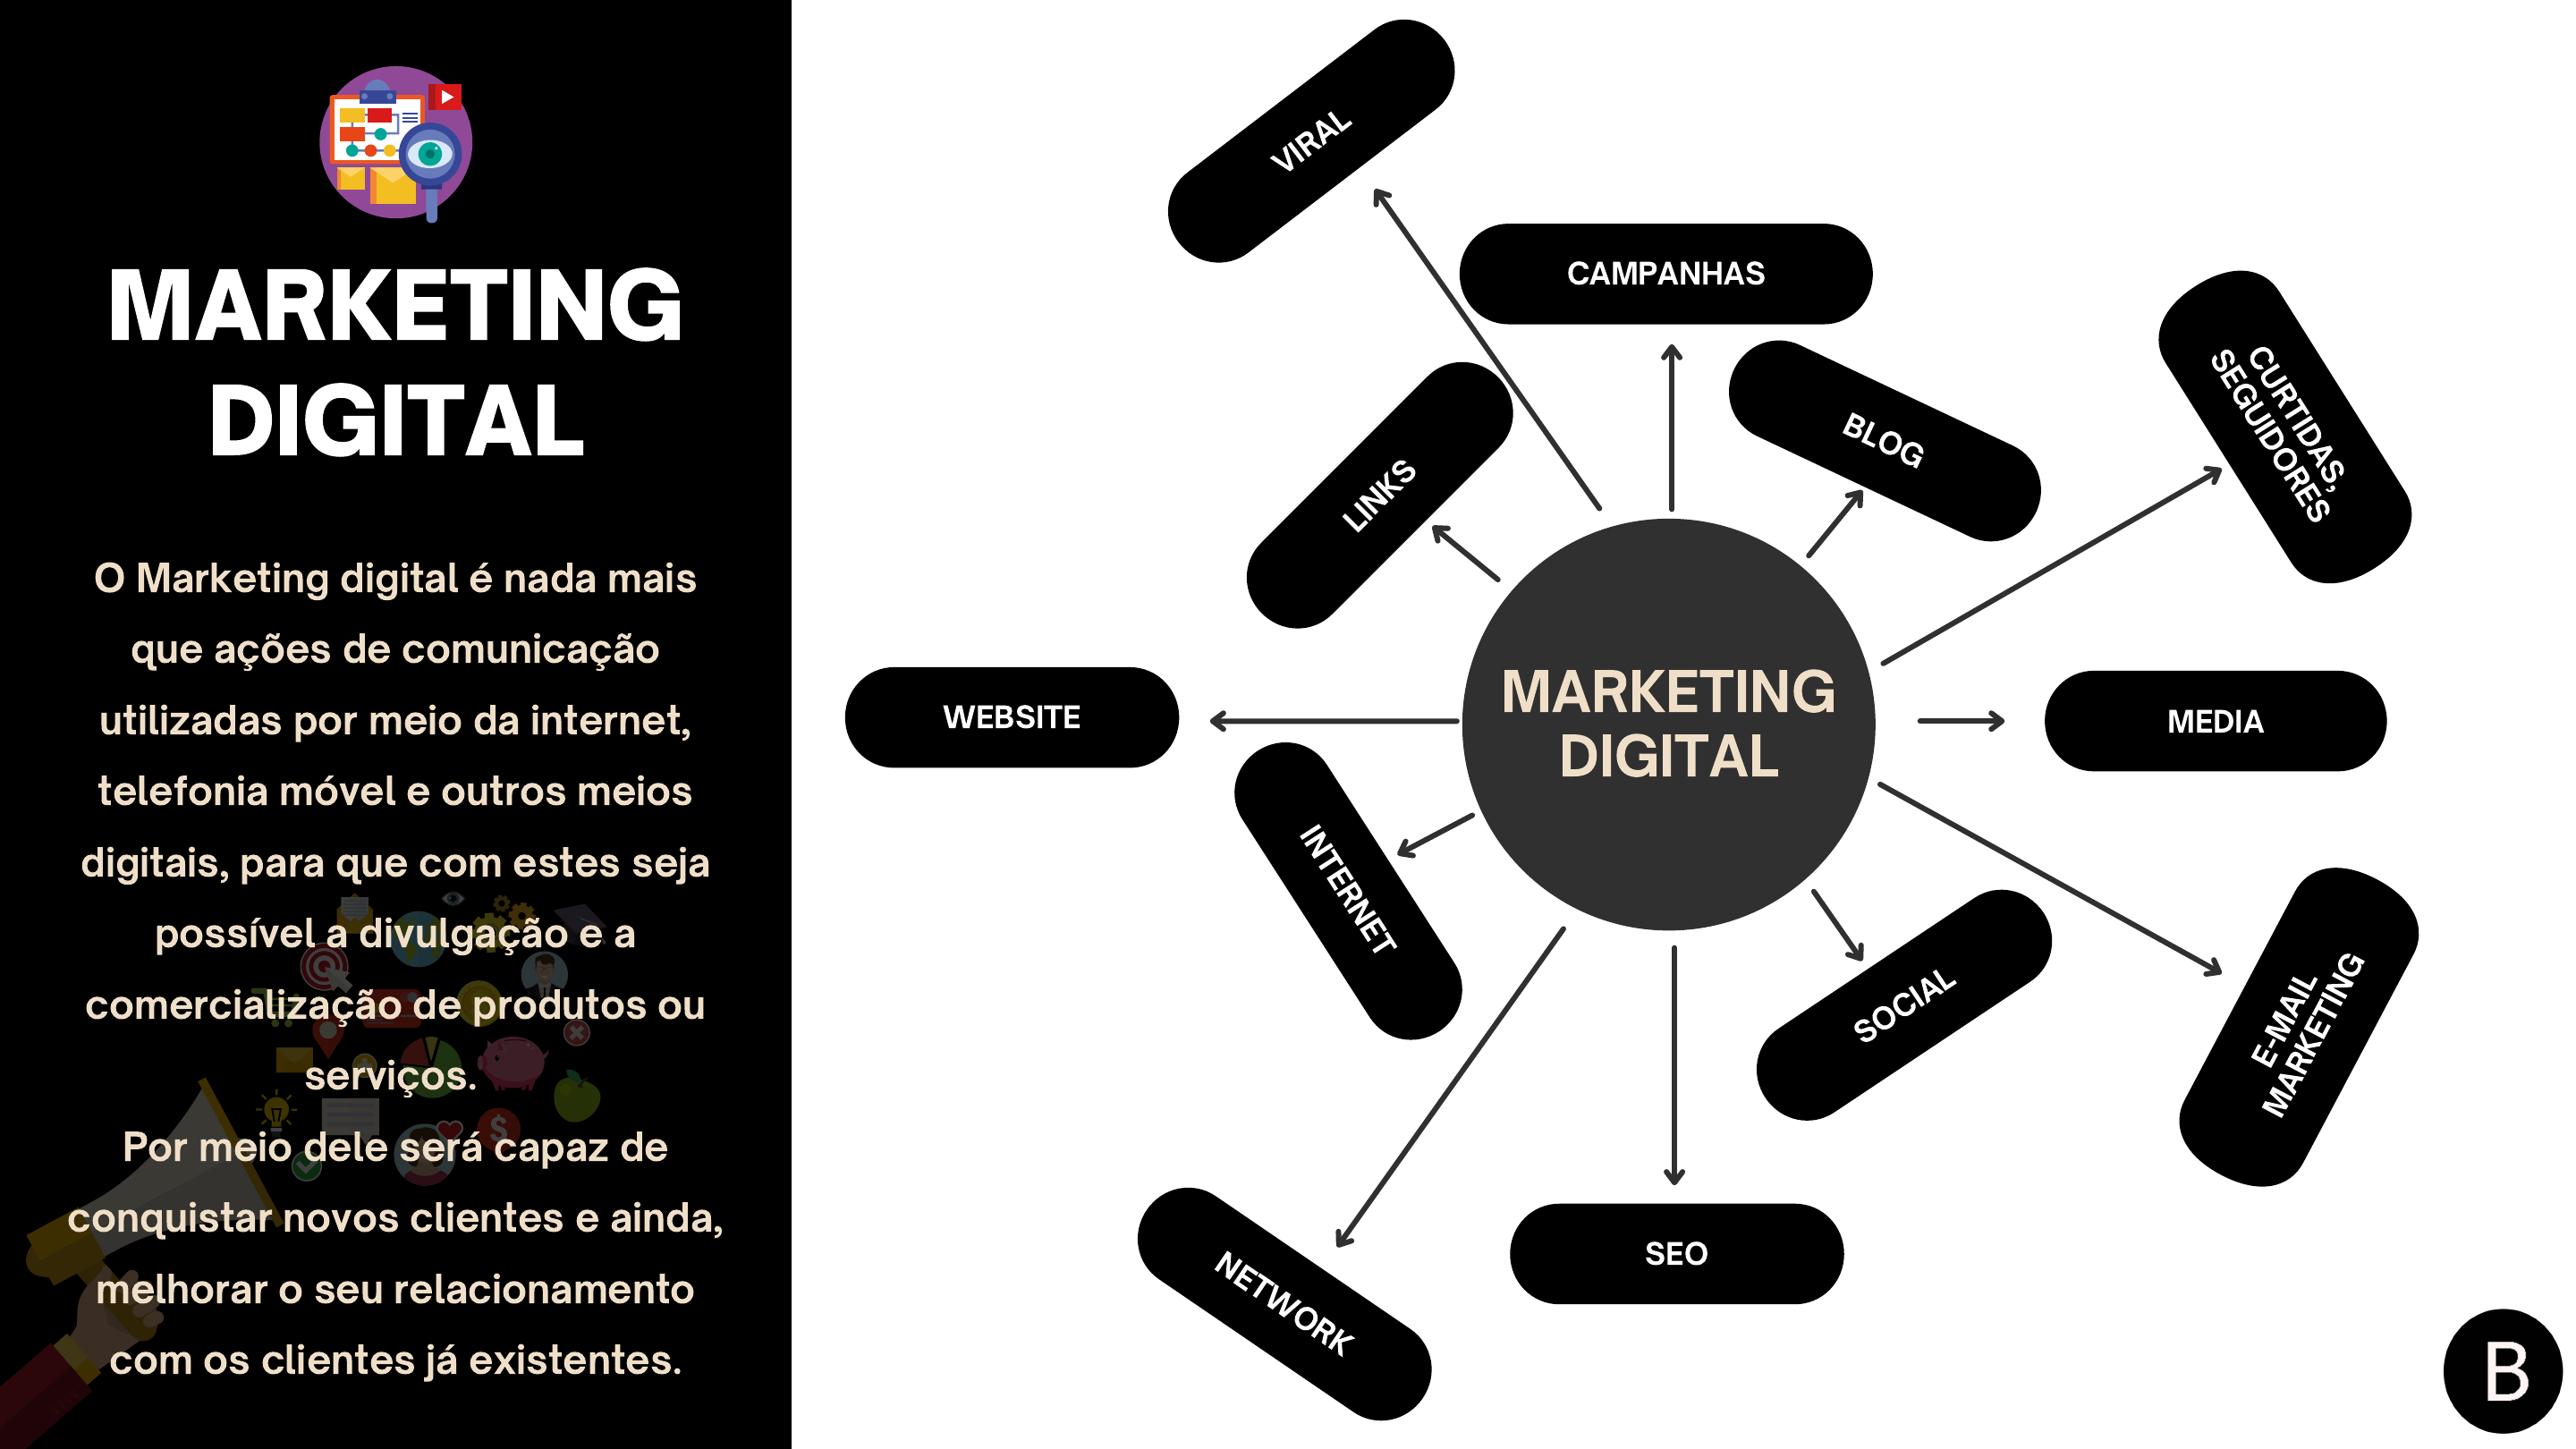 MAPA MENTAL MARKETING DIGITAL - Marketing Digital